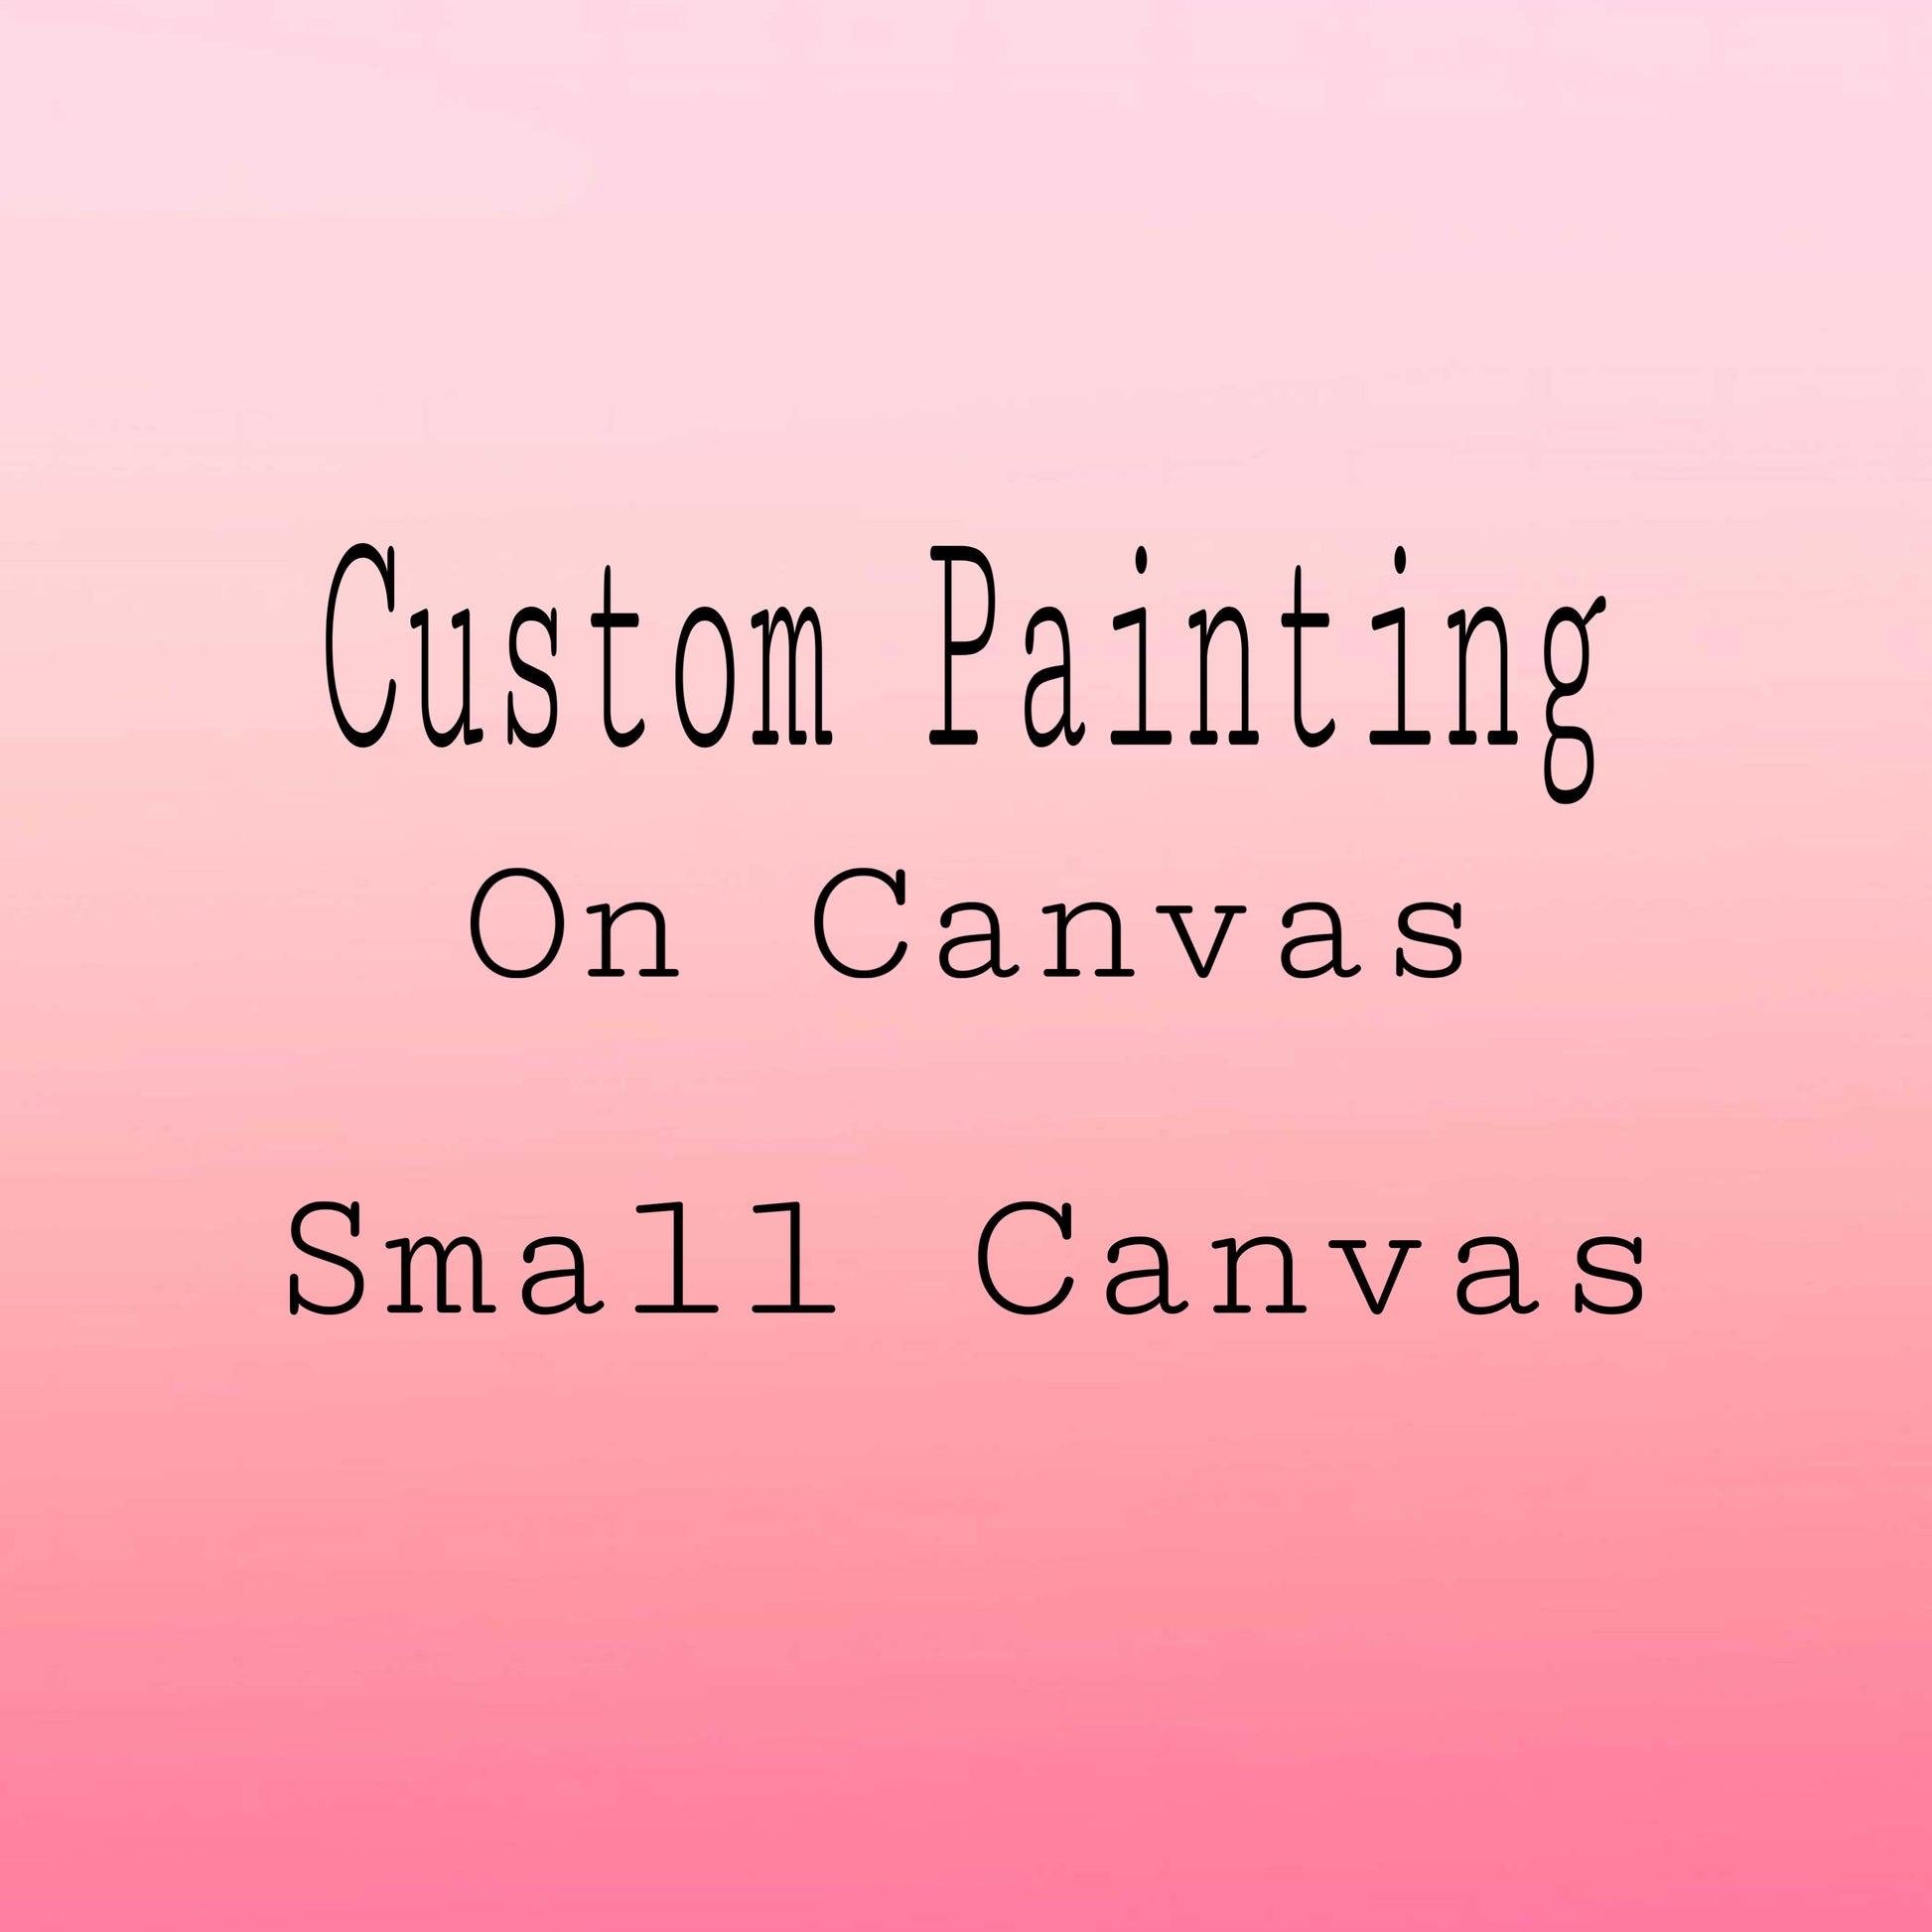 Canvas Small